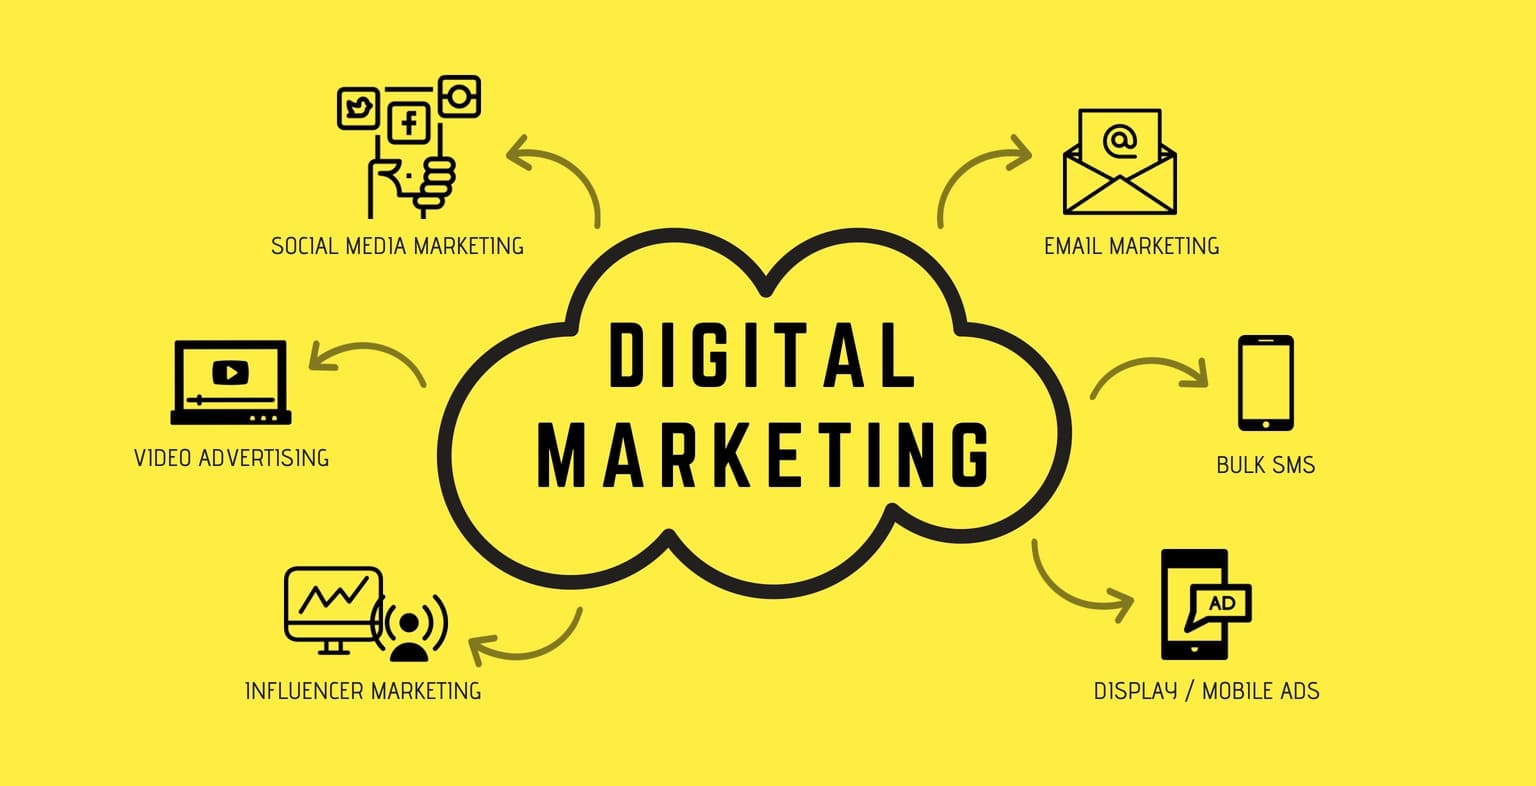 Digital Marketing or online marketing